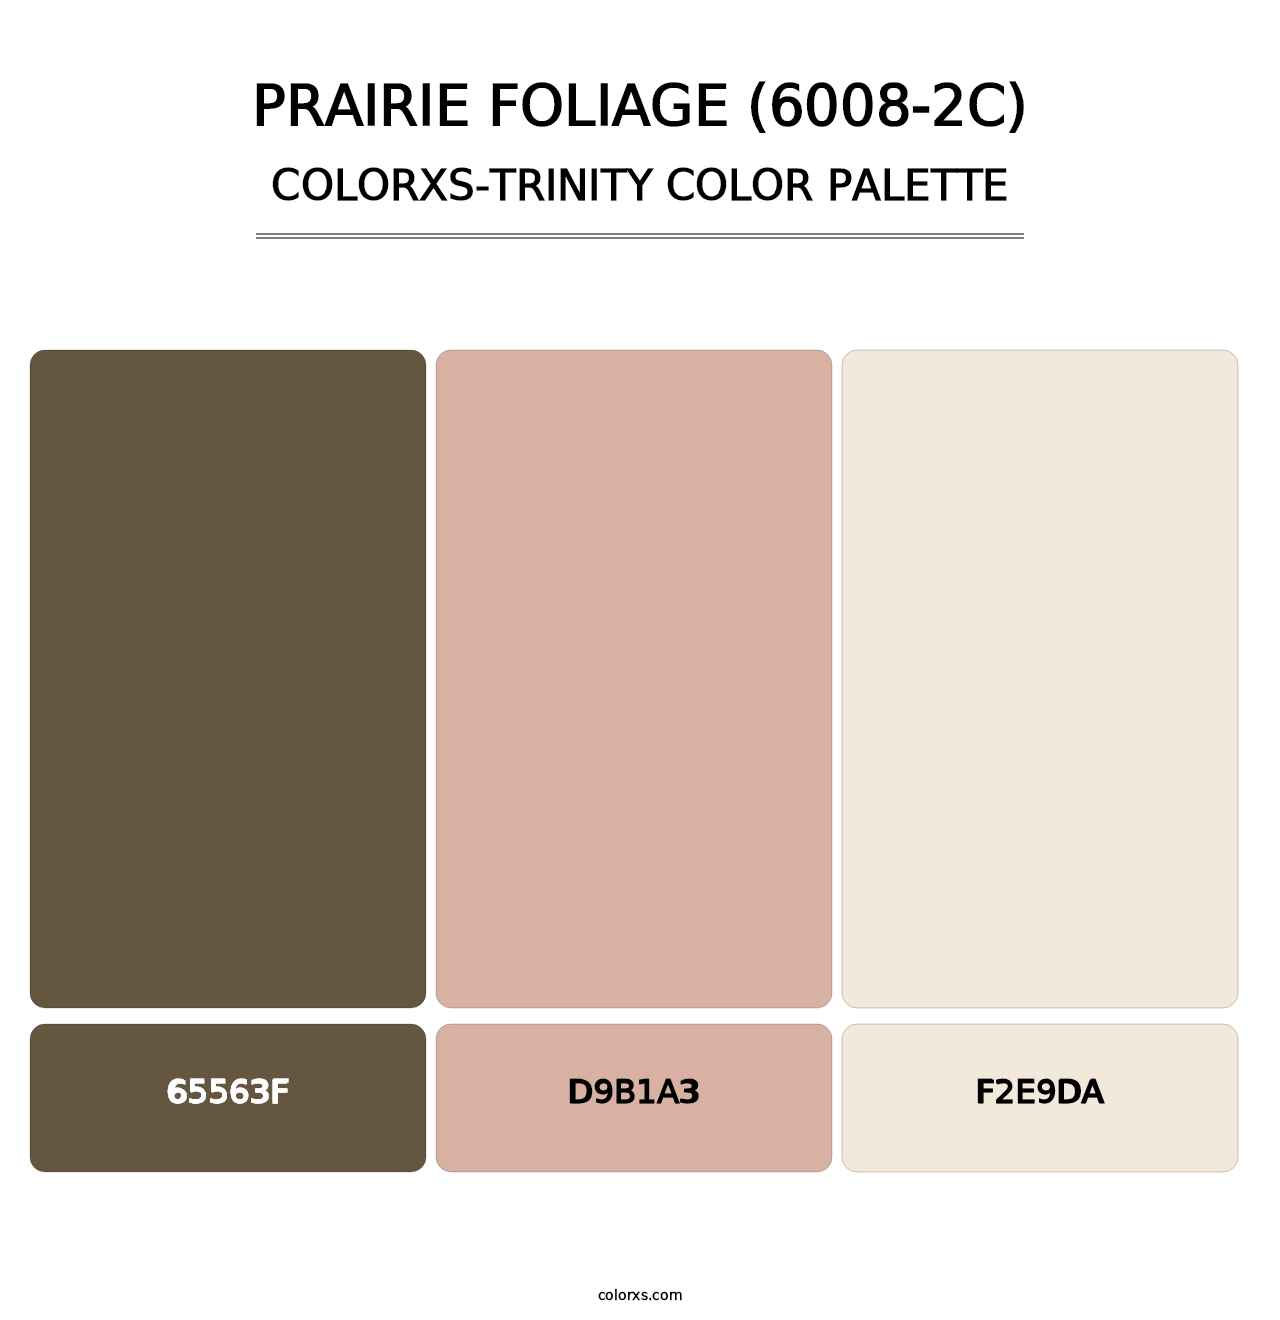 Prairie Foliage (6008-2C) - Colorxs Trinity Palette